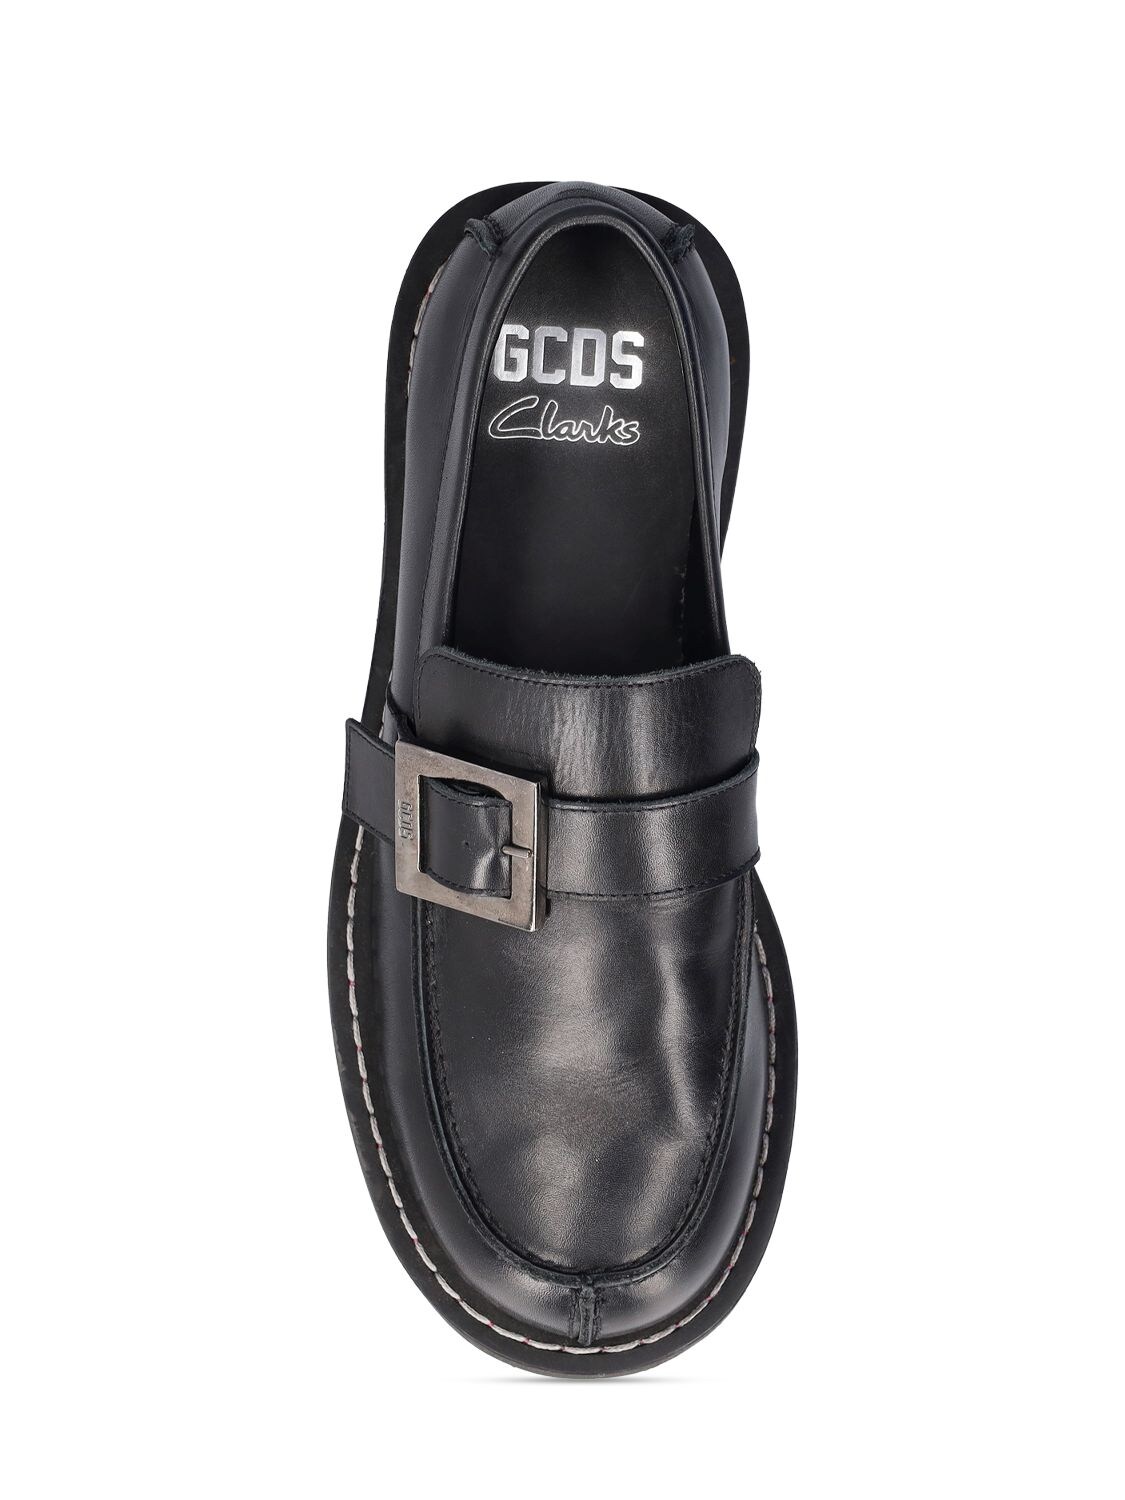 GCDS CLARKS MIX皮革乐福鞋 